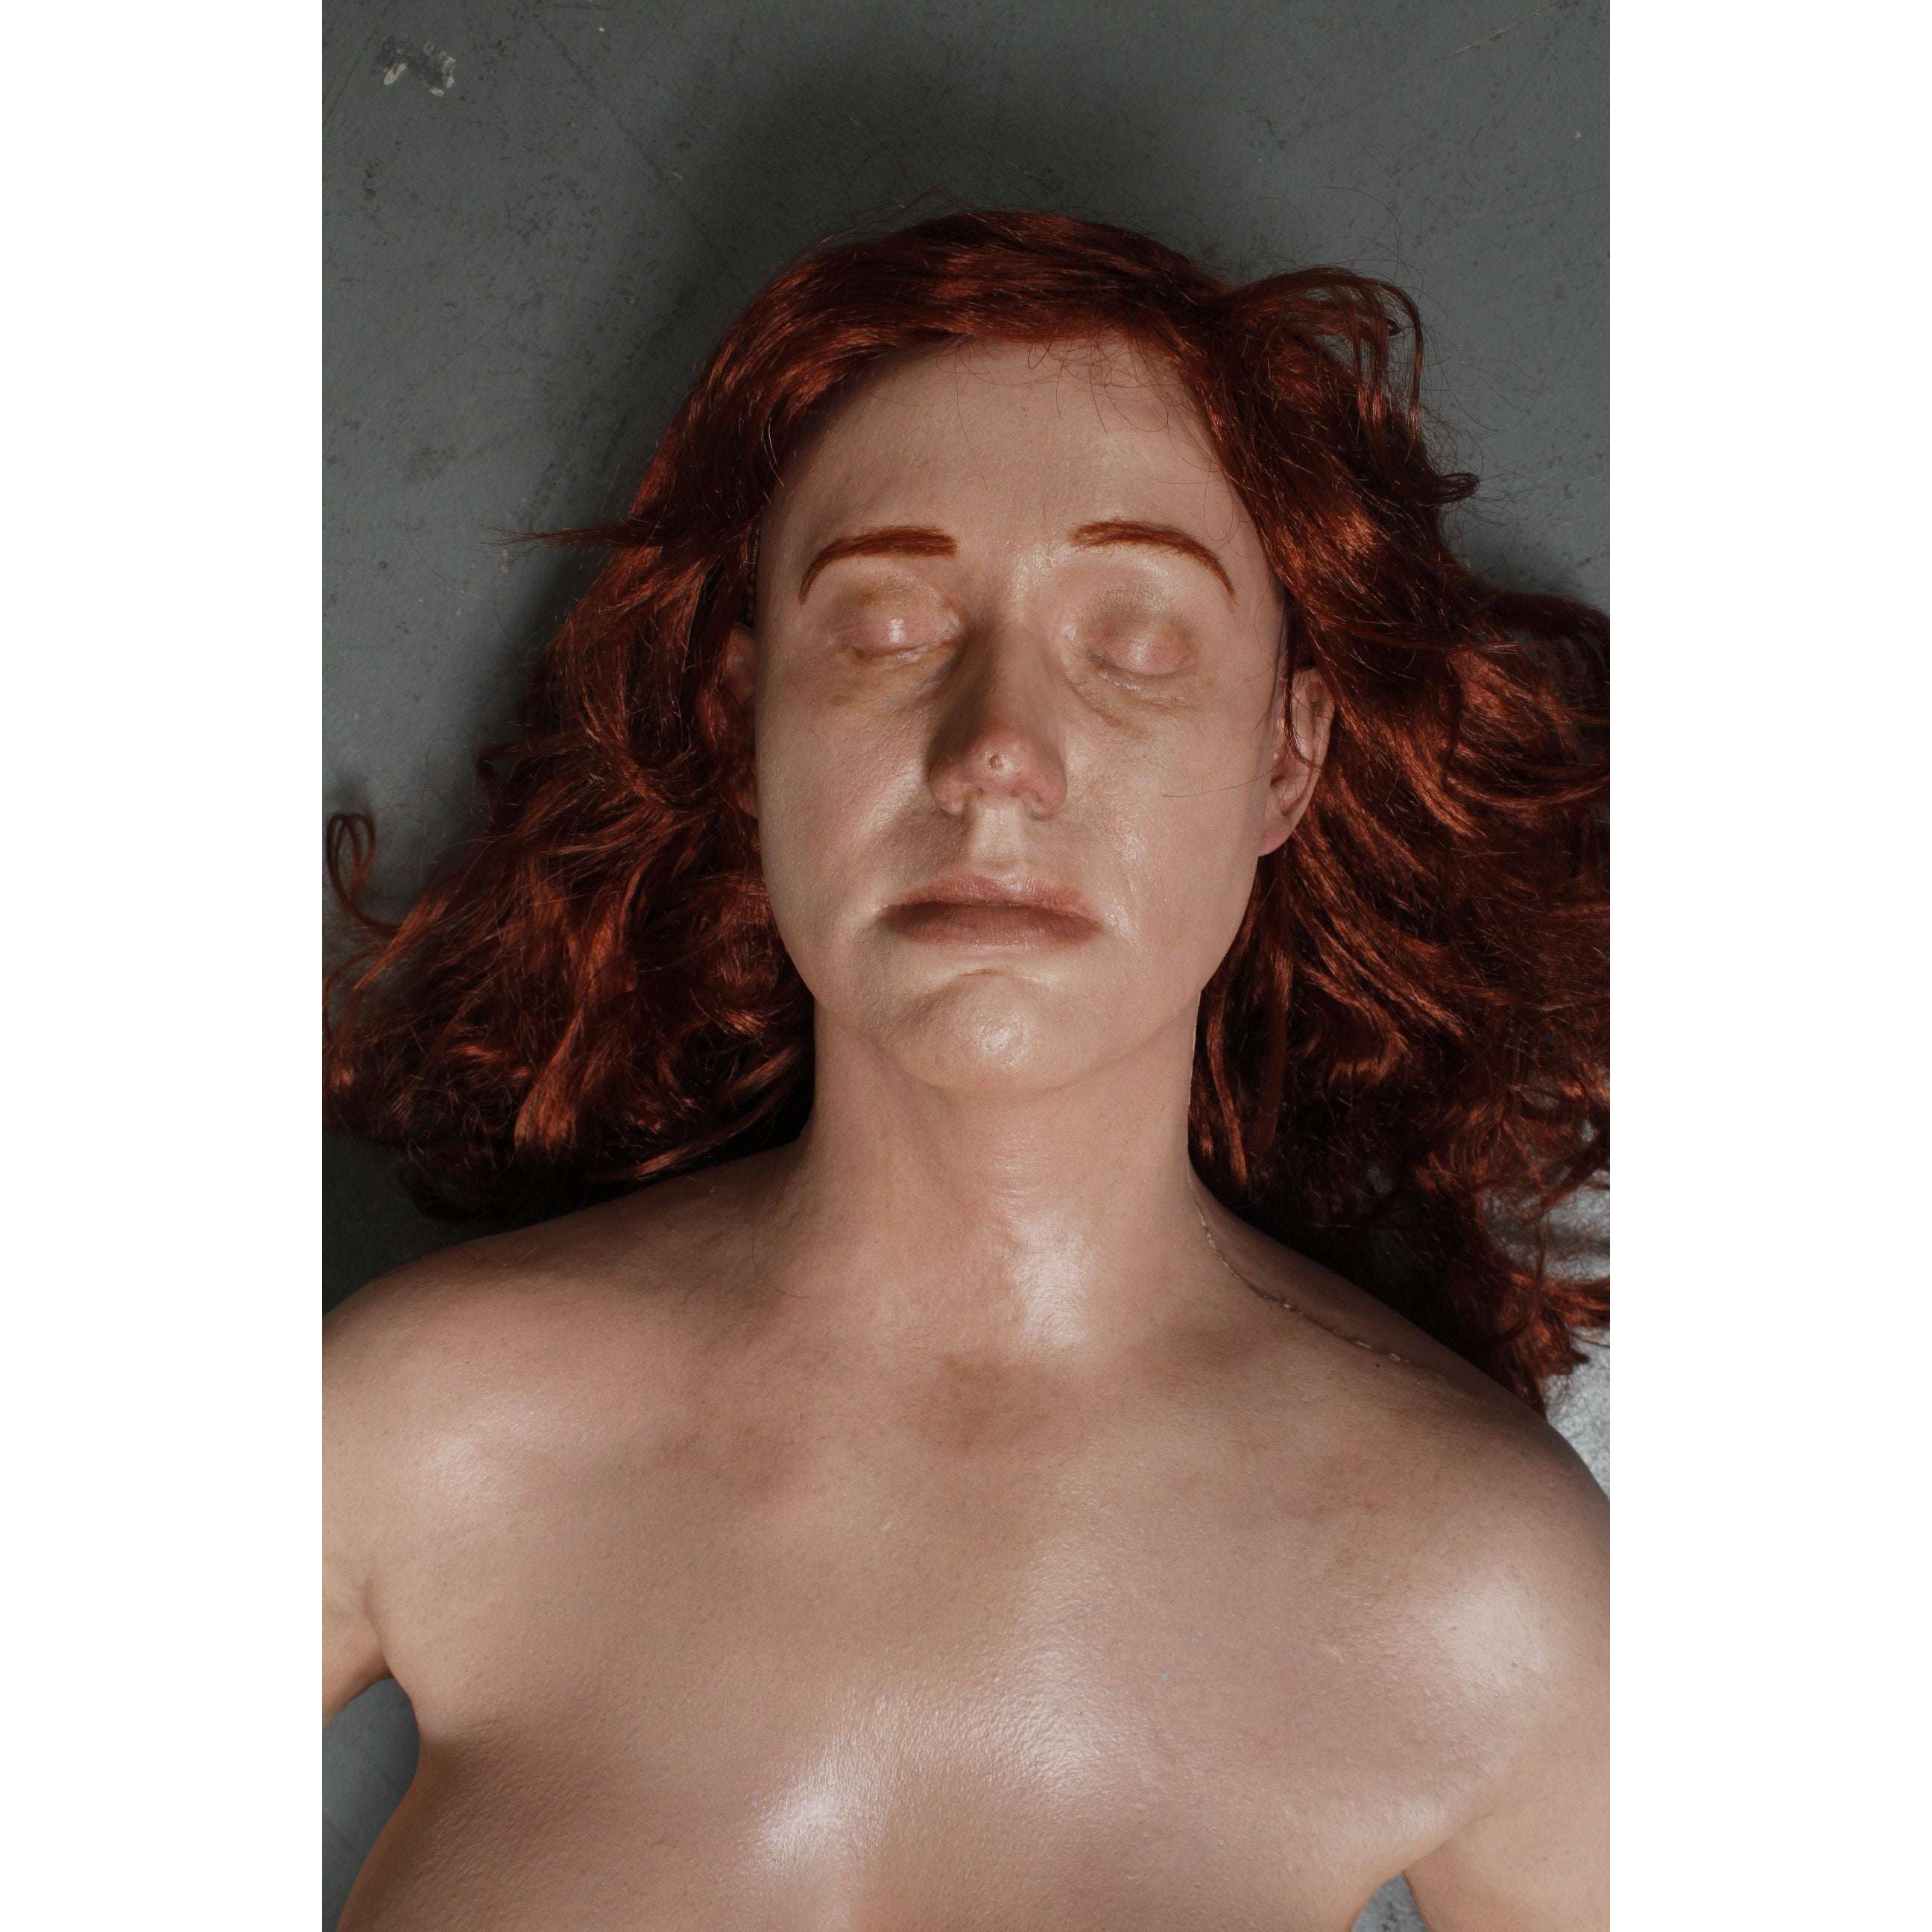 Jessica Full Female Corpse Body in Pale